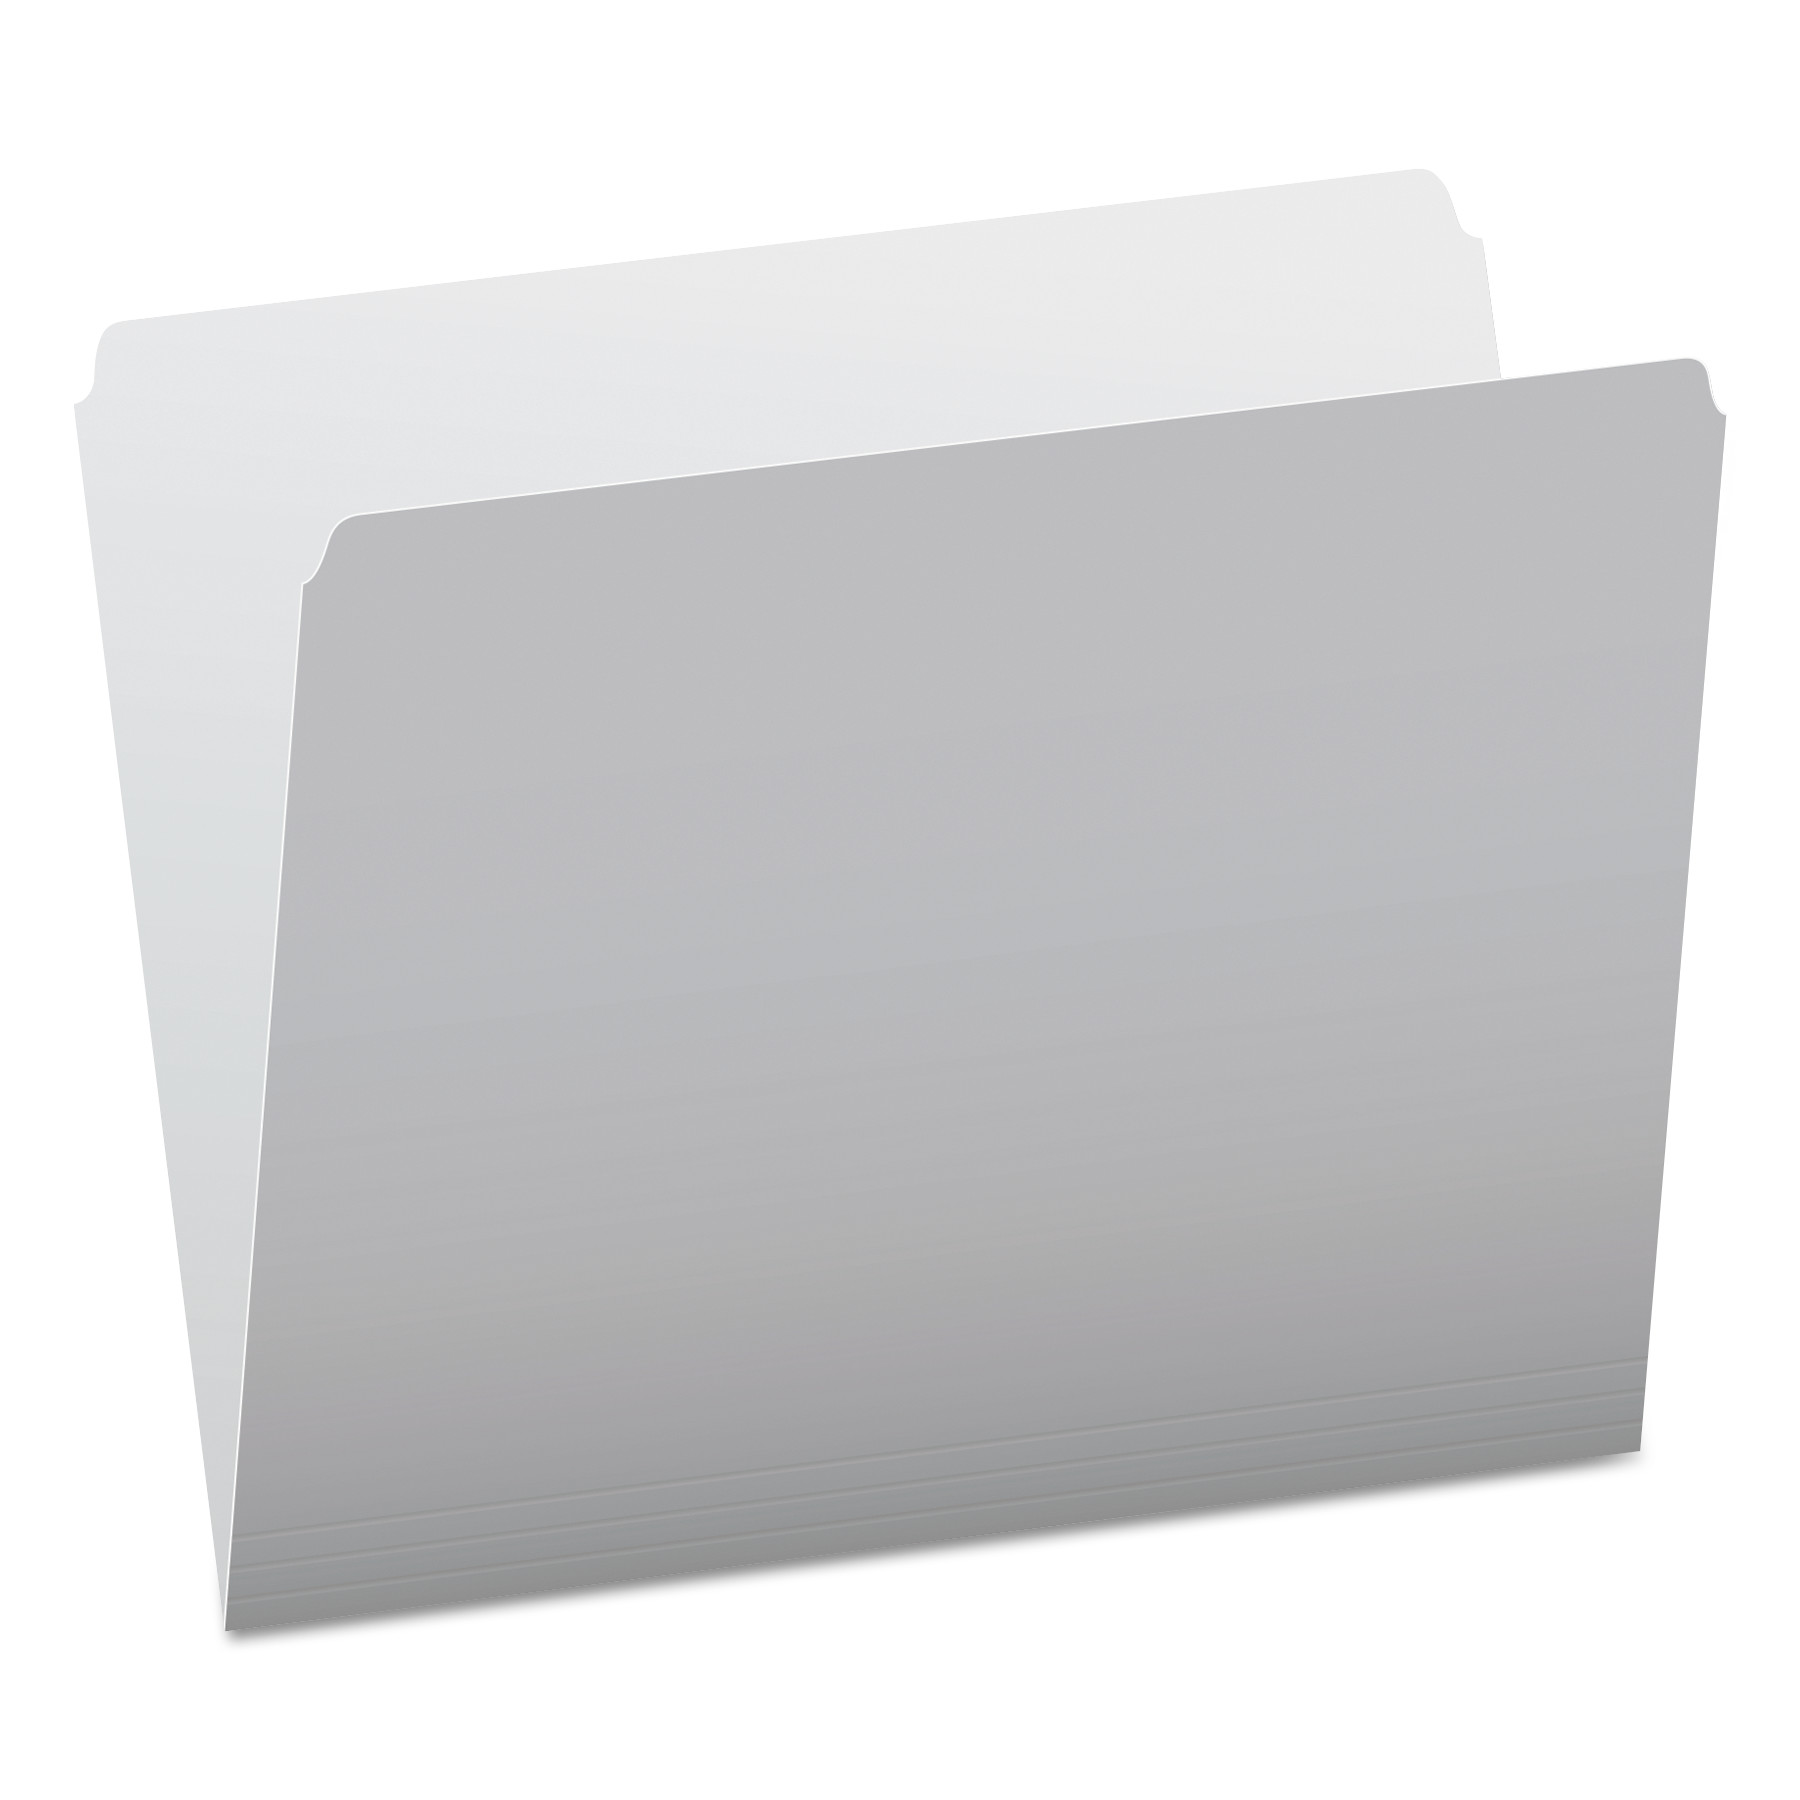  Pendaflex 152 GRA Colored File Folders, Straight Tab, Letter Size, Gray/Light Gray, 100/Box (PFX152GRA) 